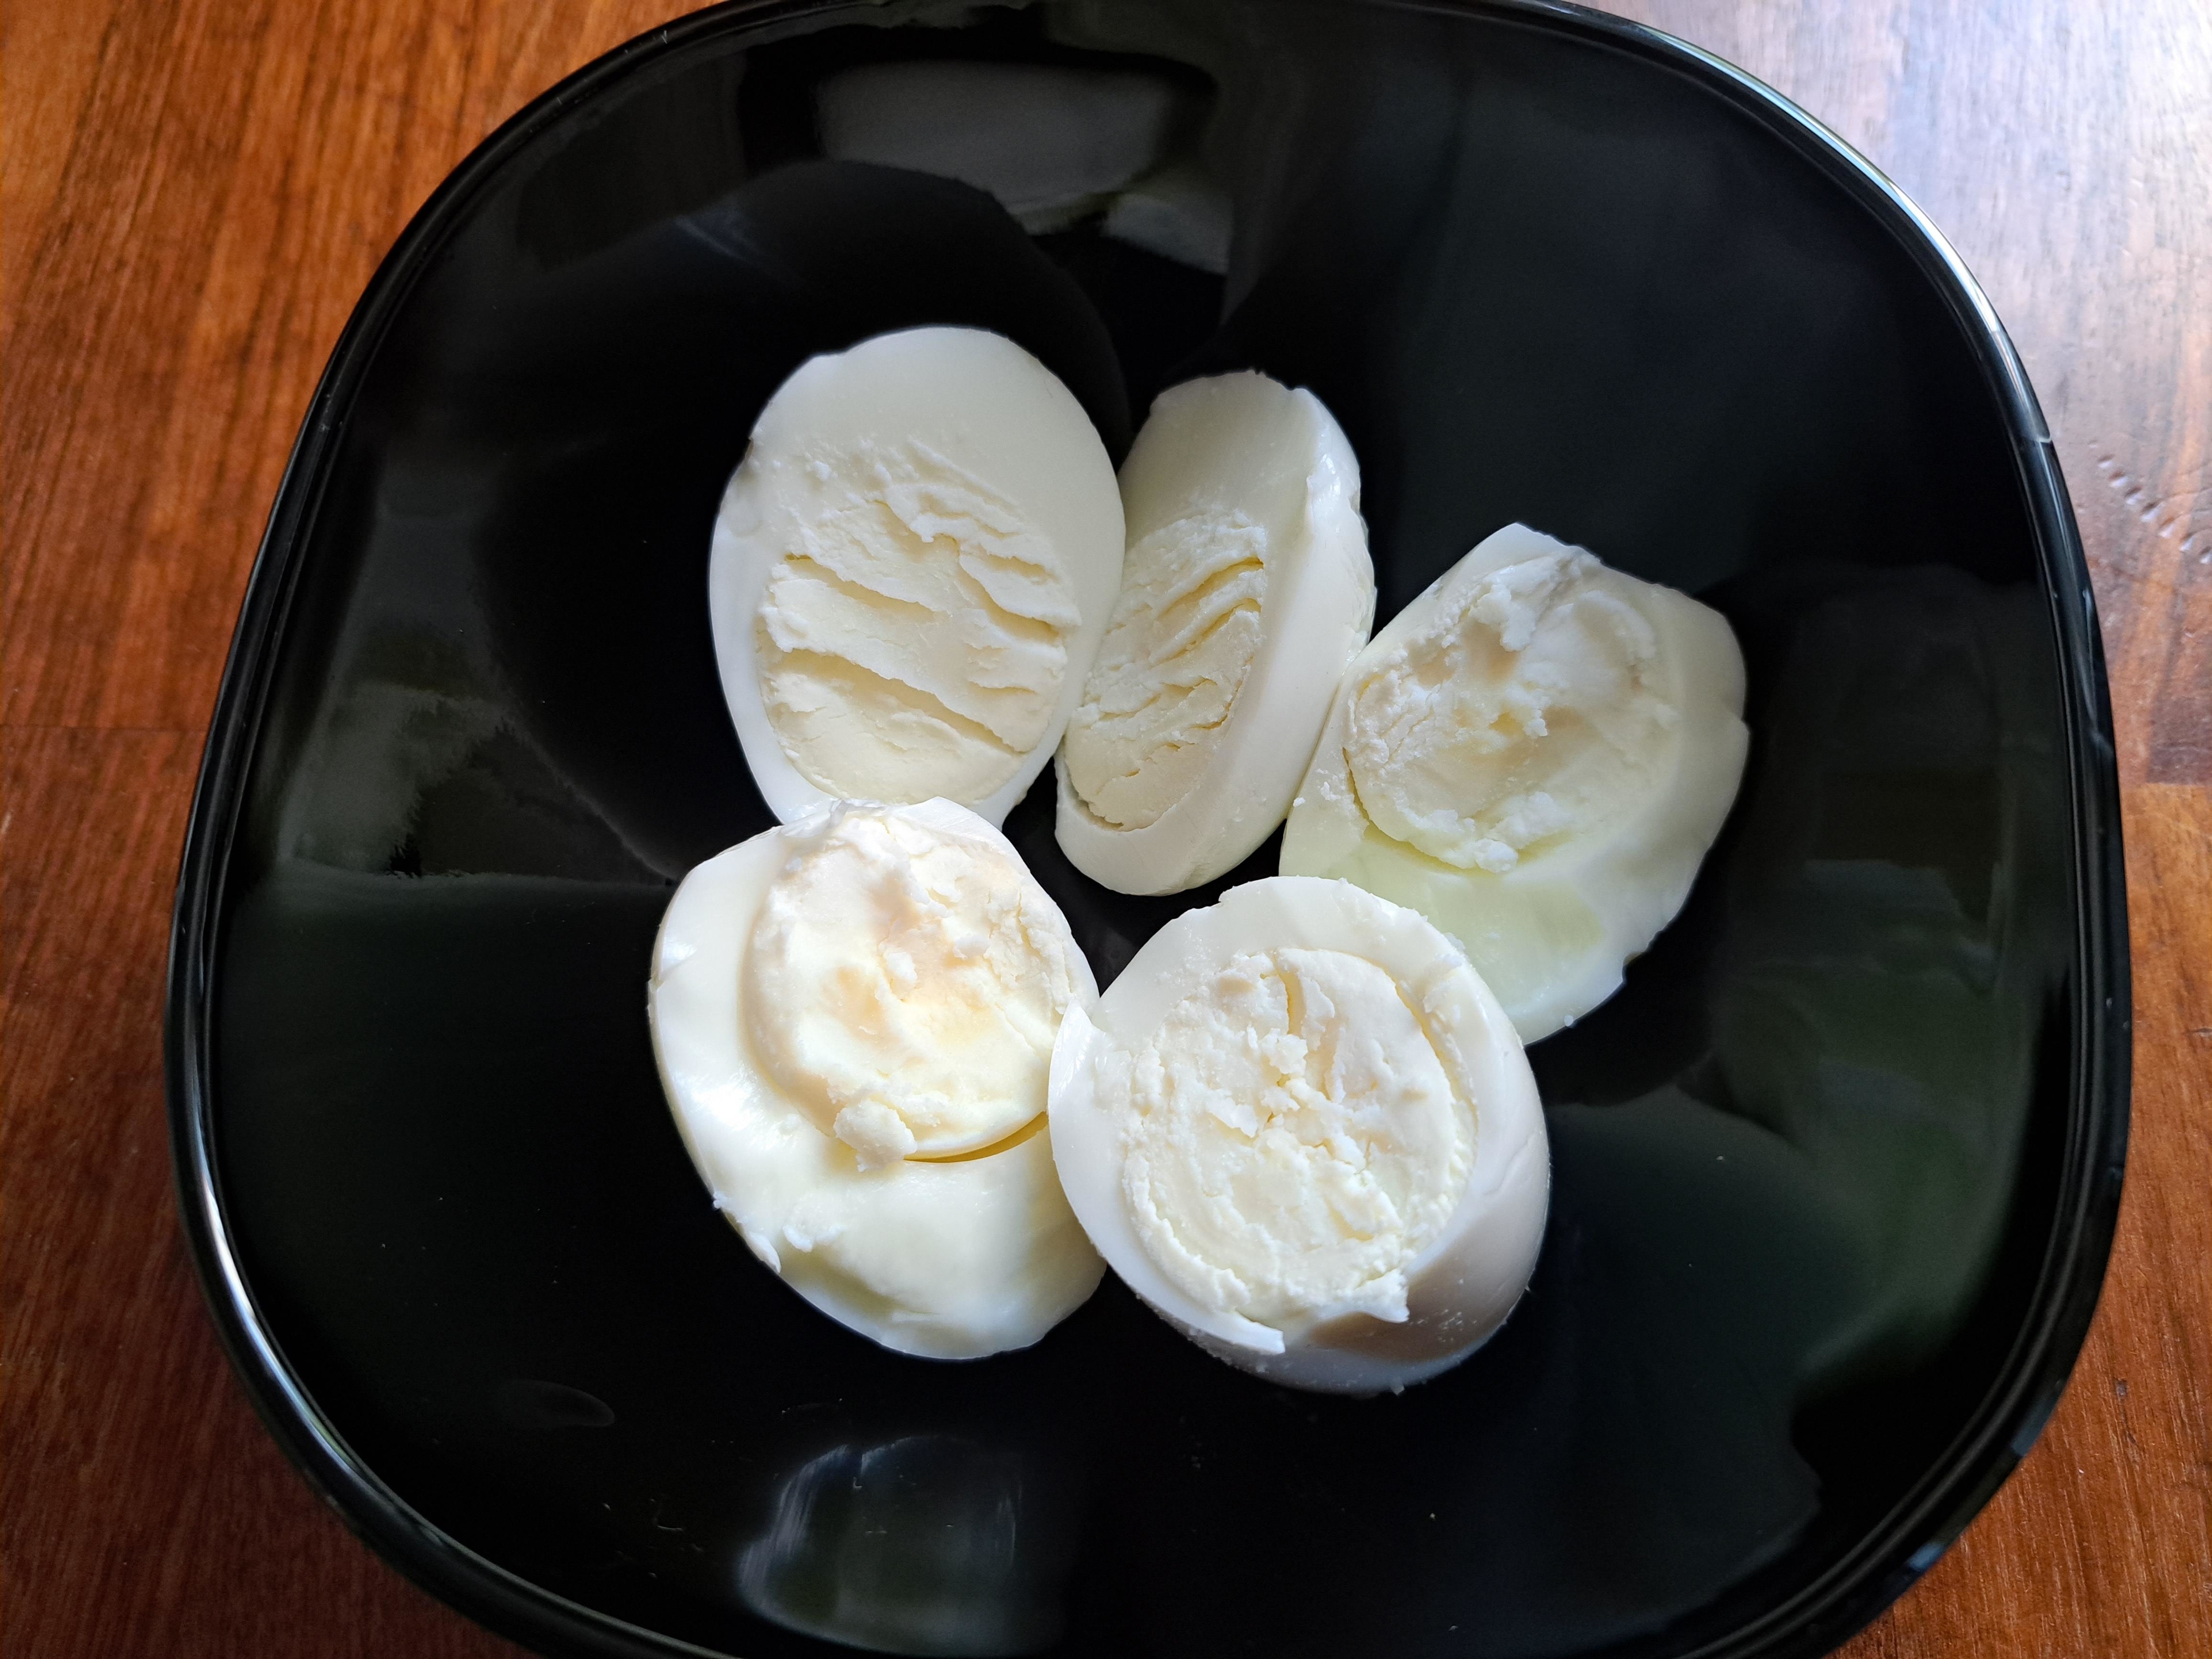 Sliced hard-boiled eggs  with white yolks